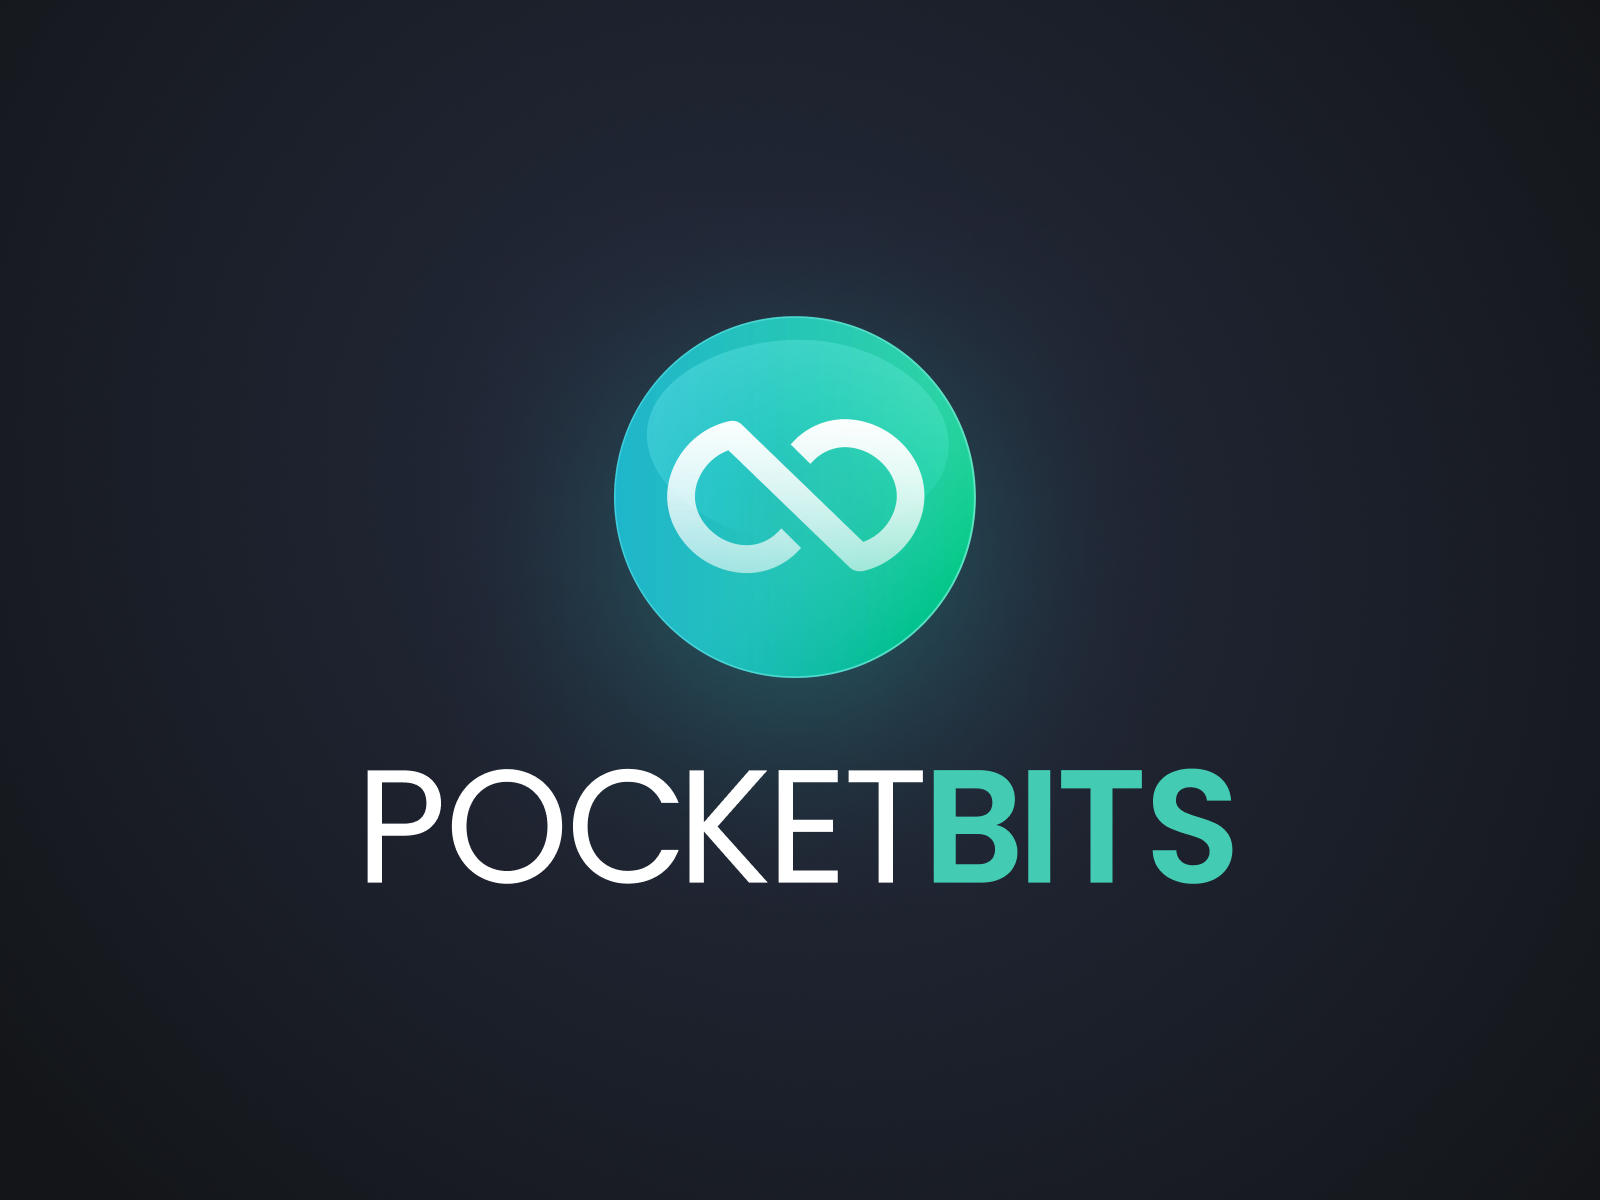 PocketBits Logo Revamp by Sreenath Pradeep on Dribbble